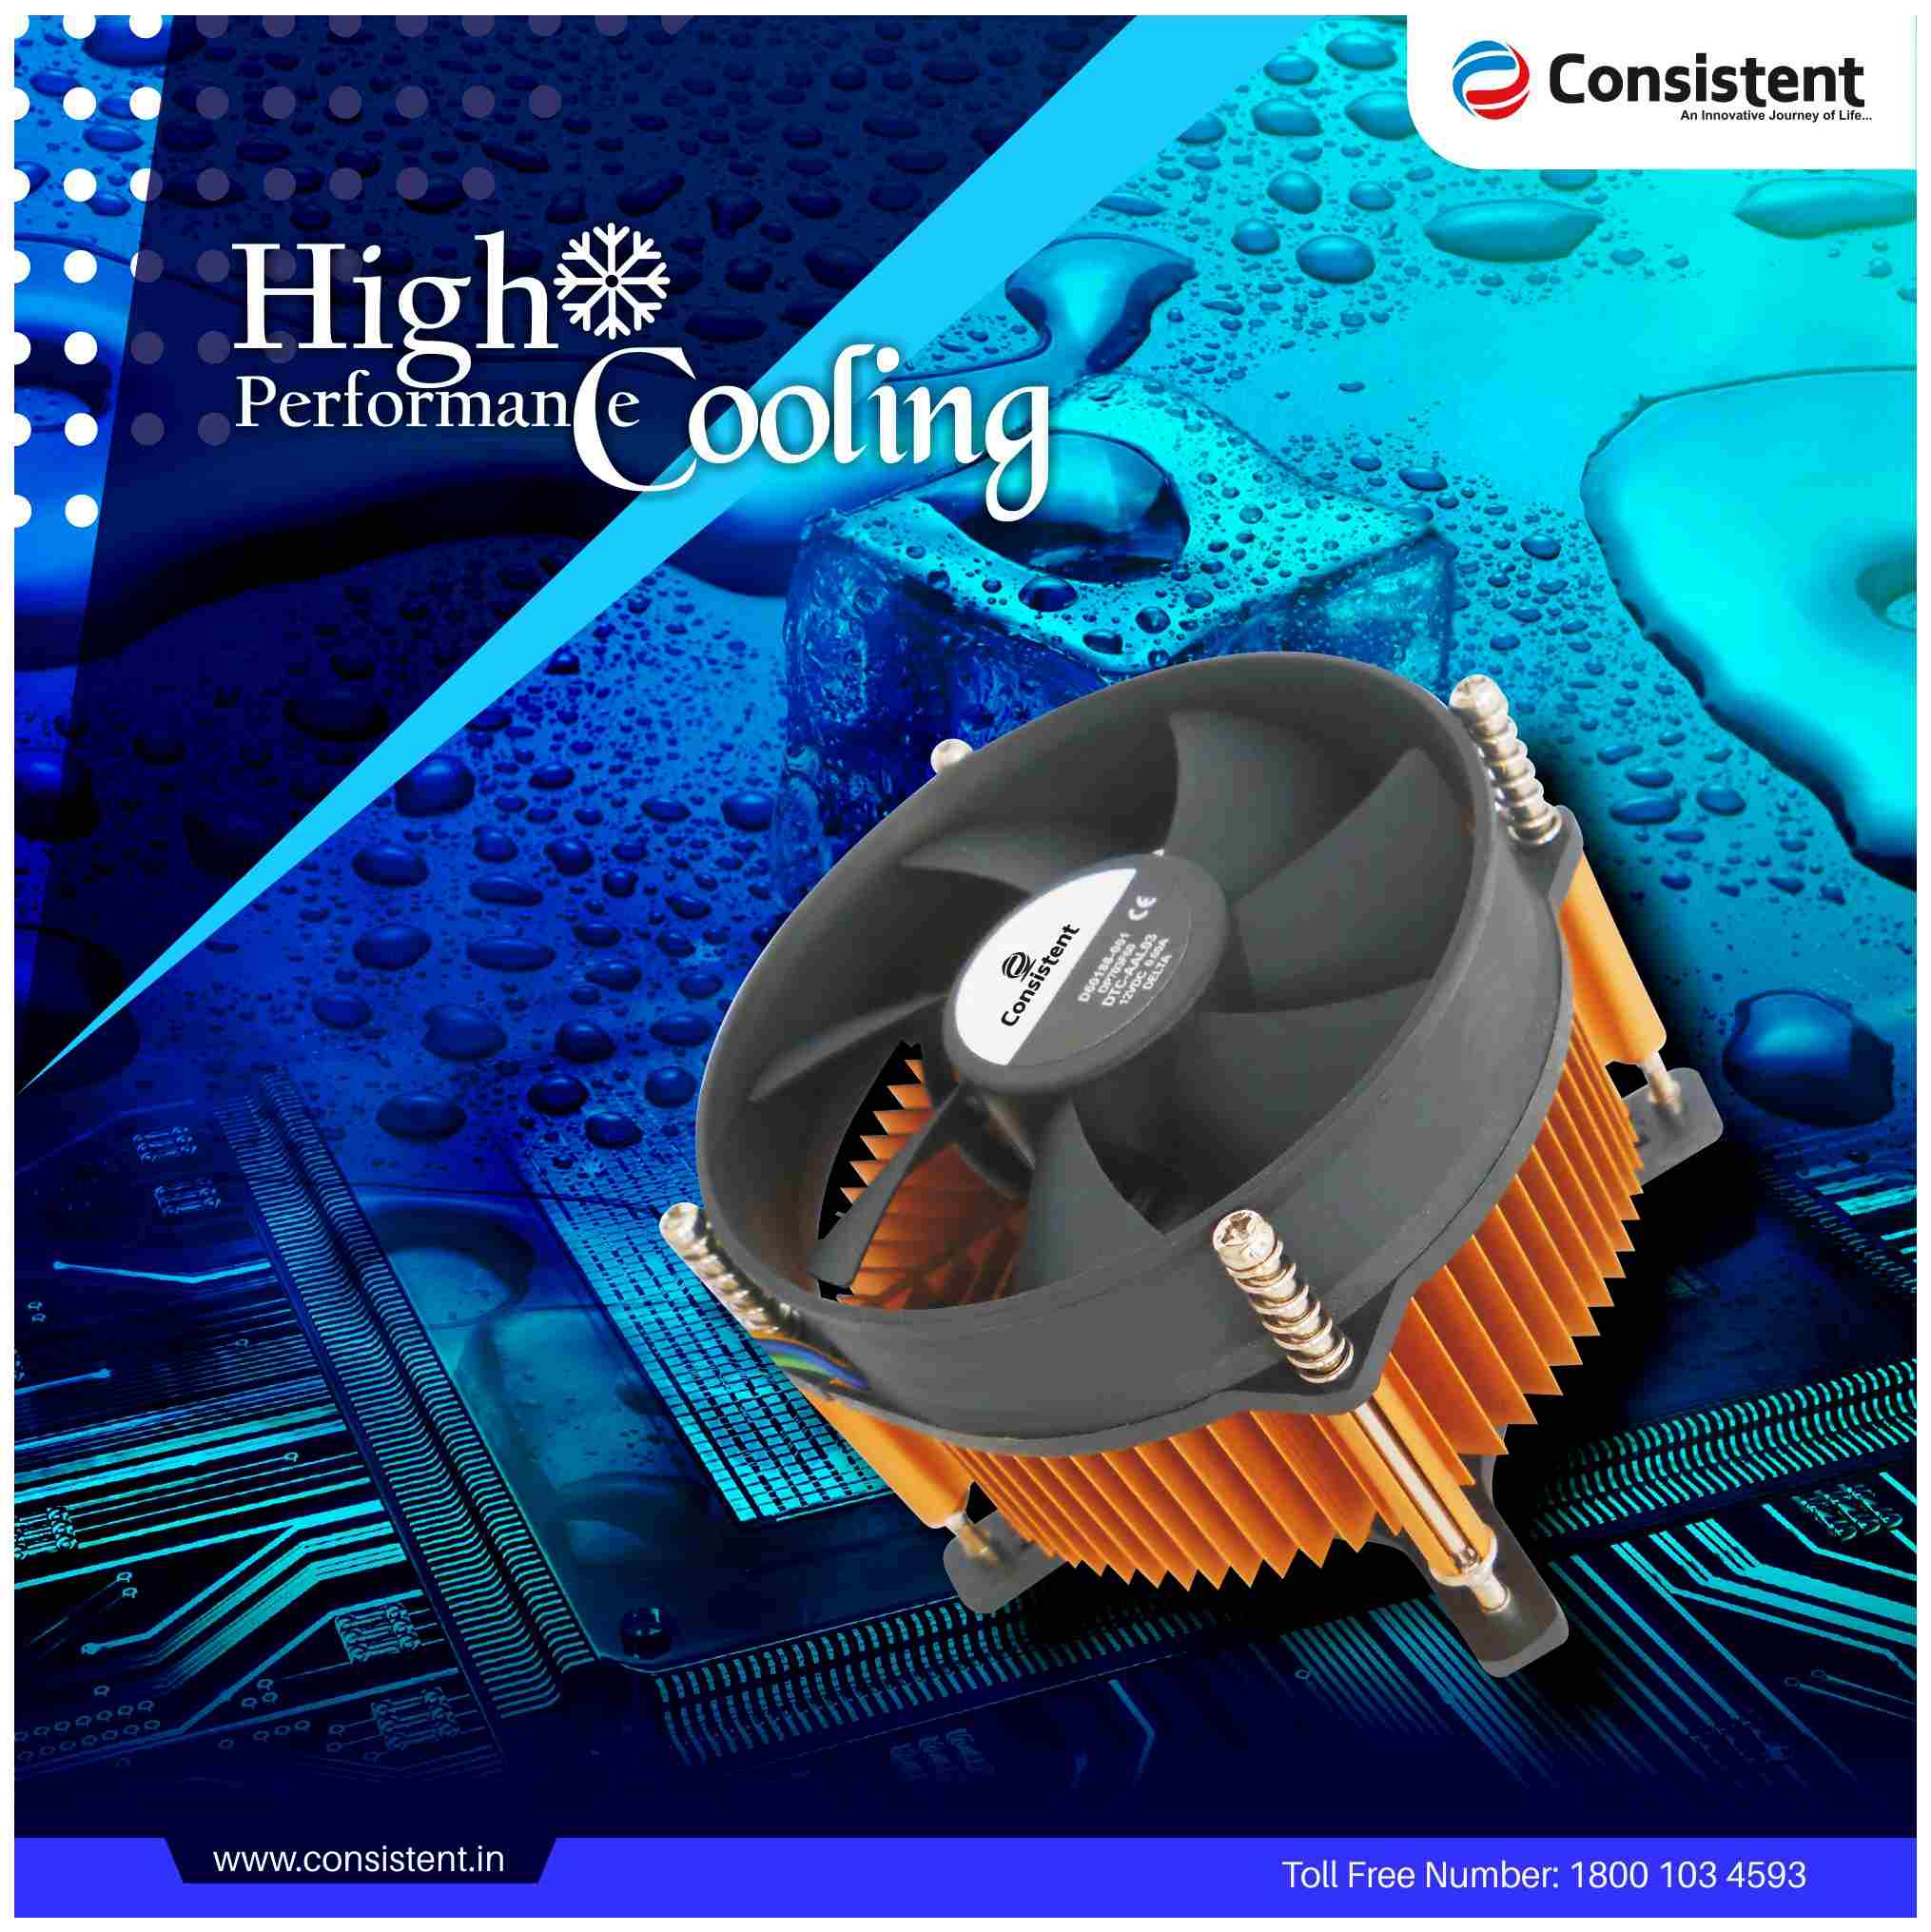 Consistent CPU Coolar fan